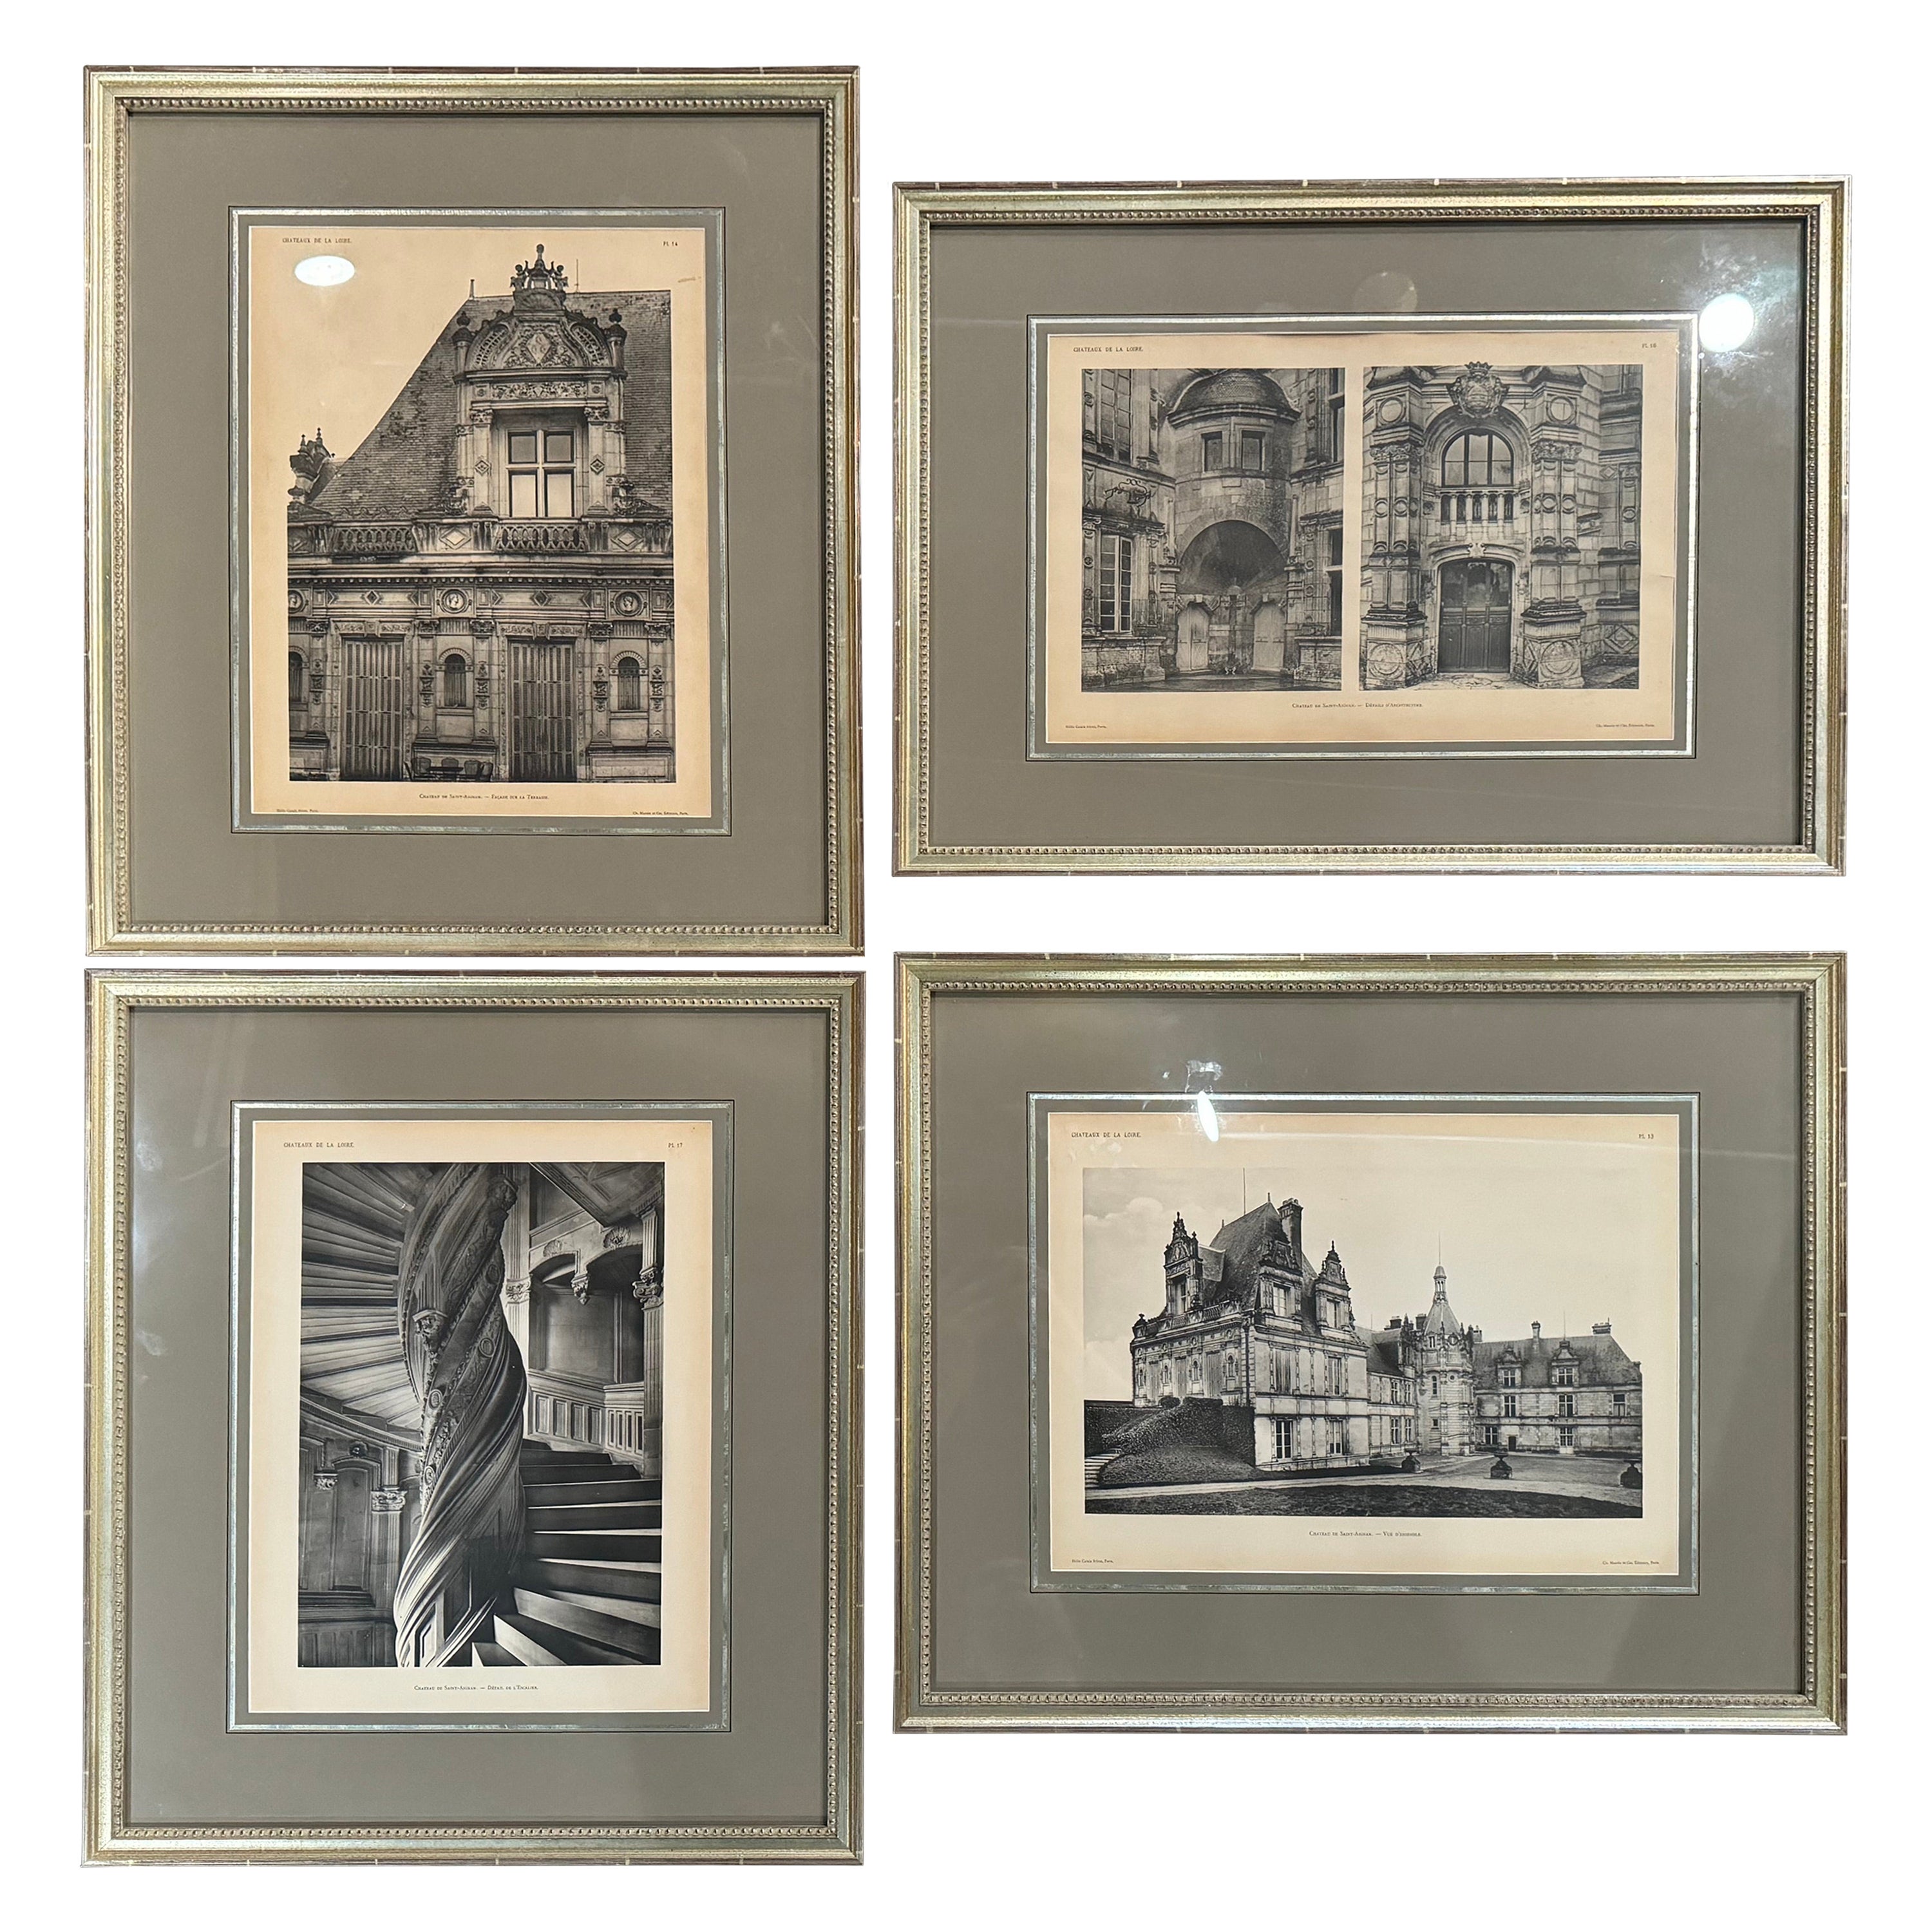 19th Century French Prints in Frames, "Chateau de Saint-Aignan", Set of 4